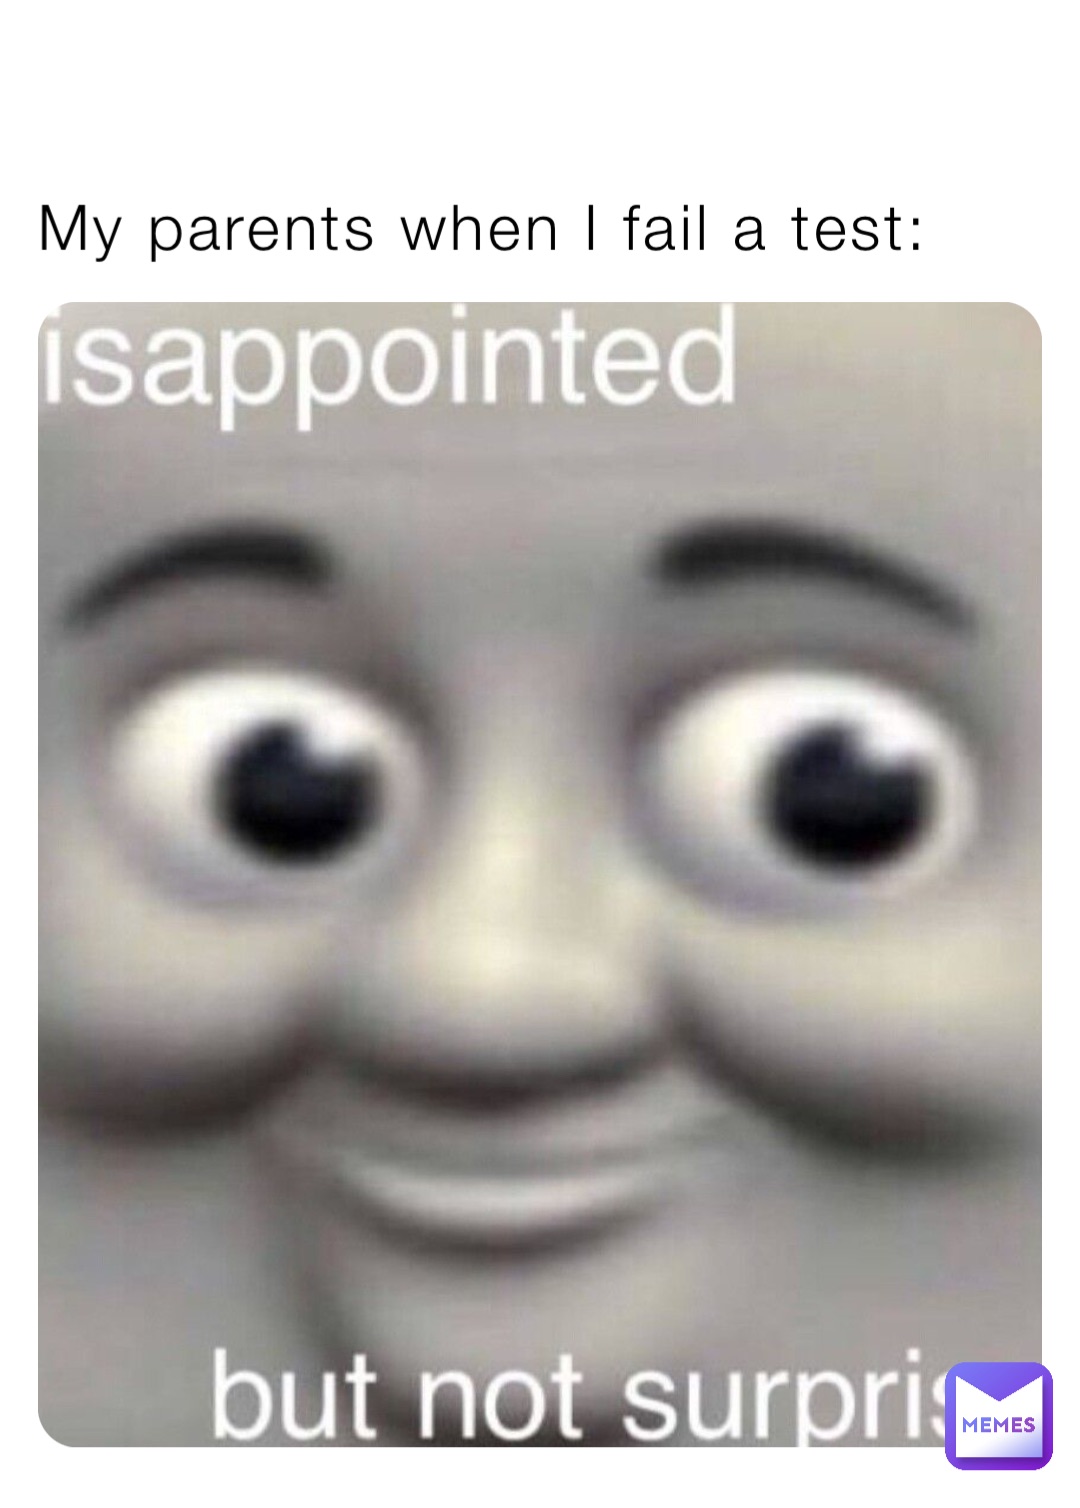 My parents when I fail a test: